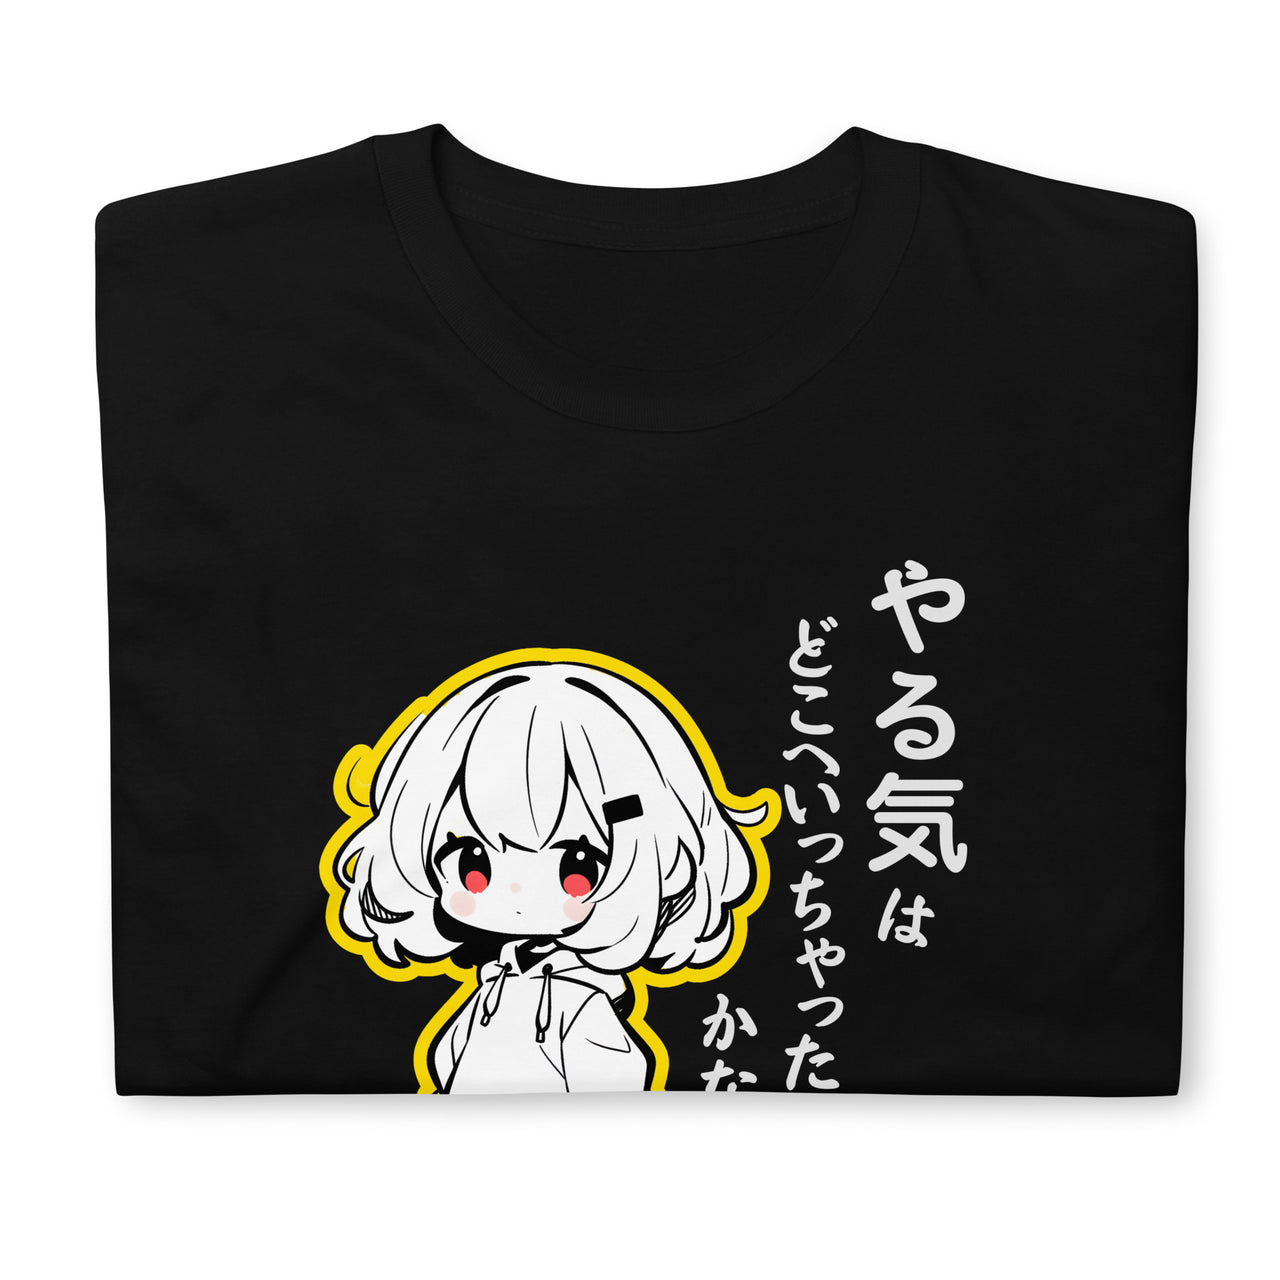 Motivation Missing: Cute Manga Girl T-Shirt